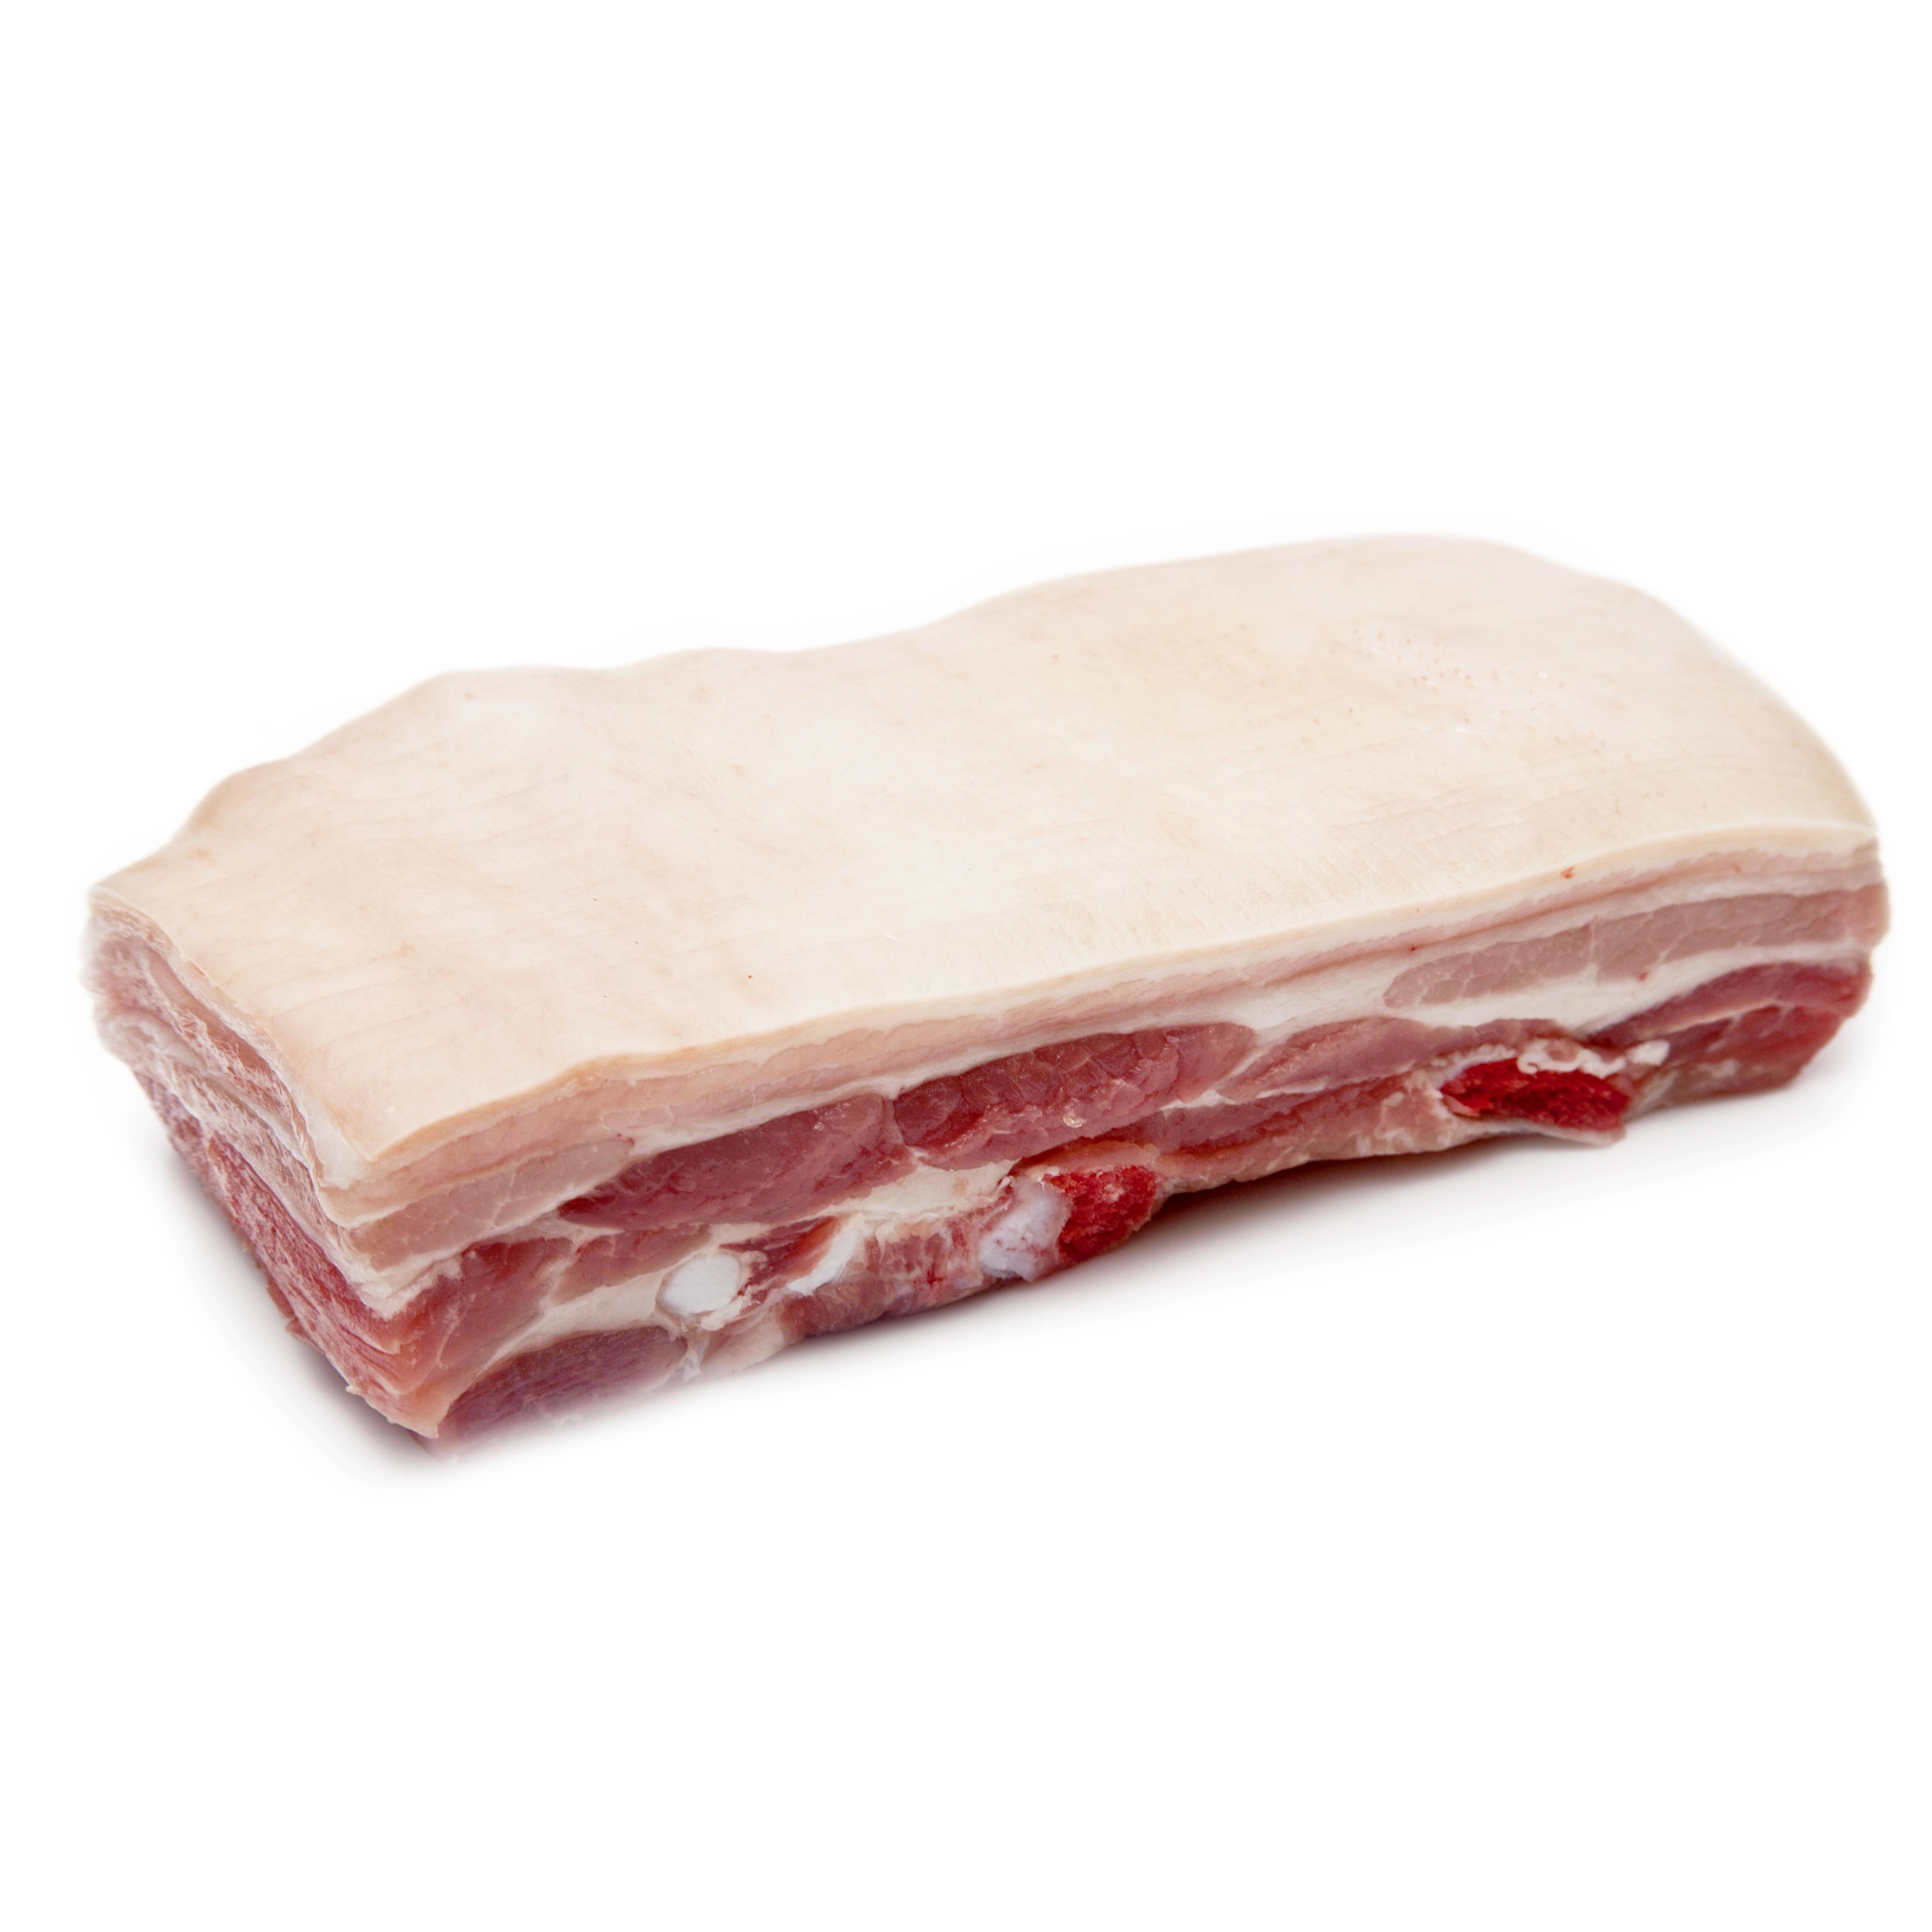 Danish Organic Pork Belly Rind On